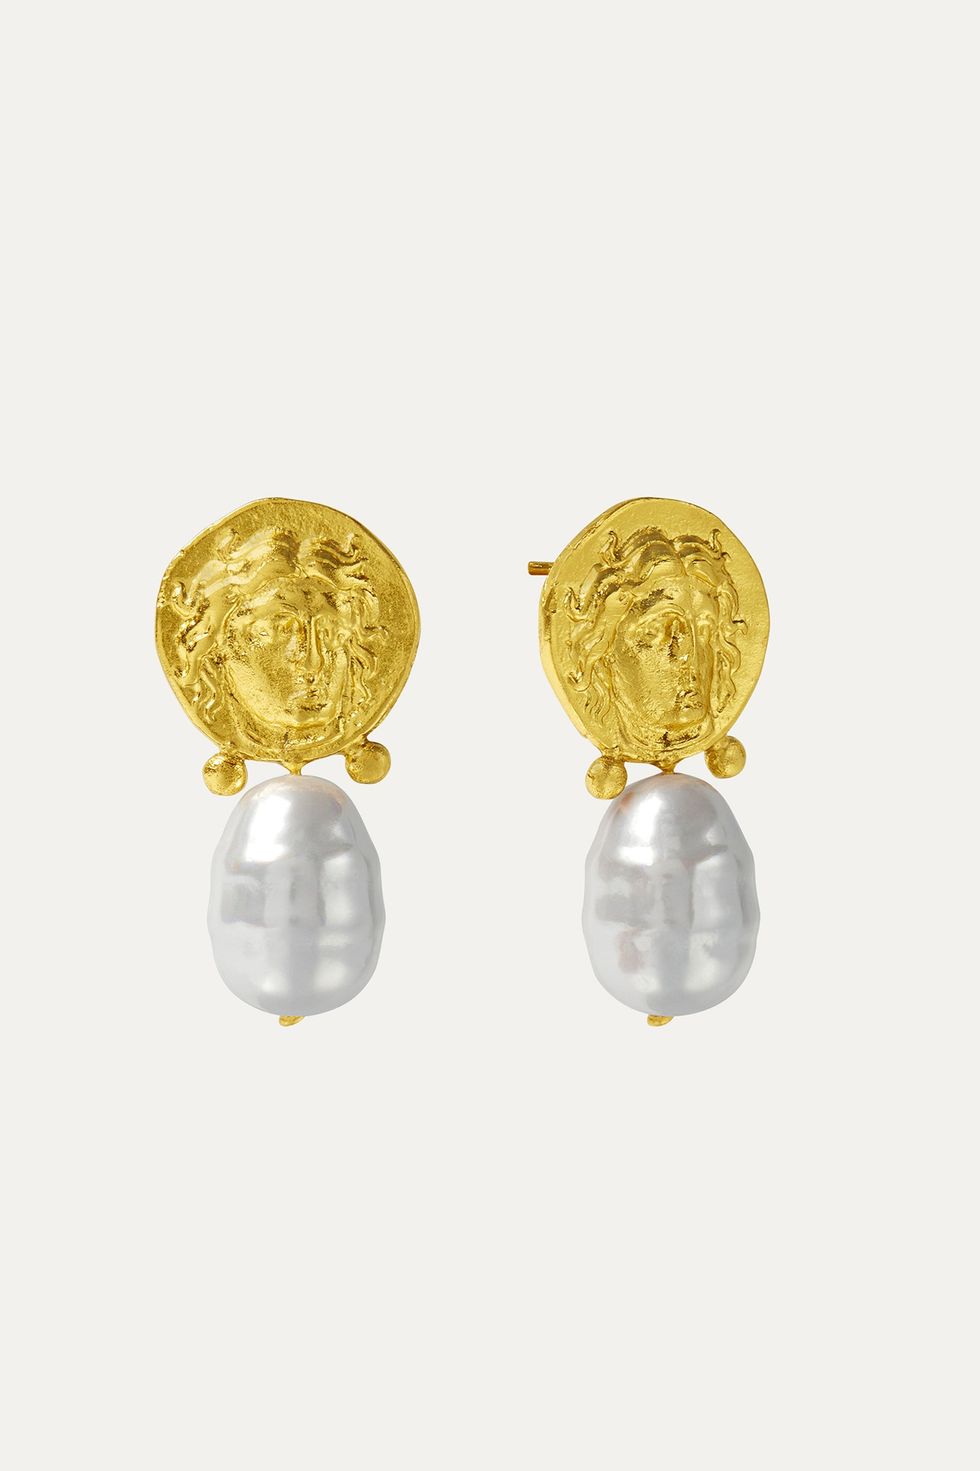 Gorgon Medusa Pearl Stud Earrings